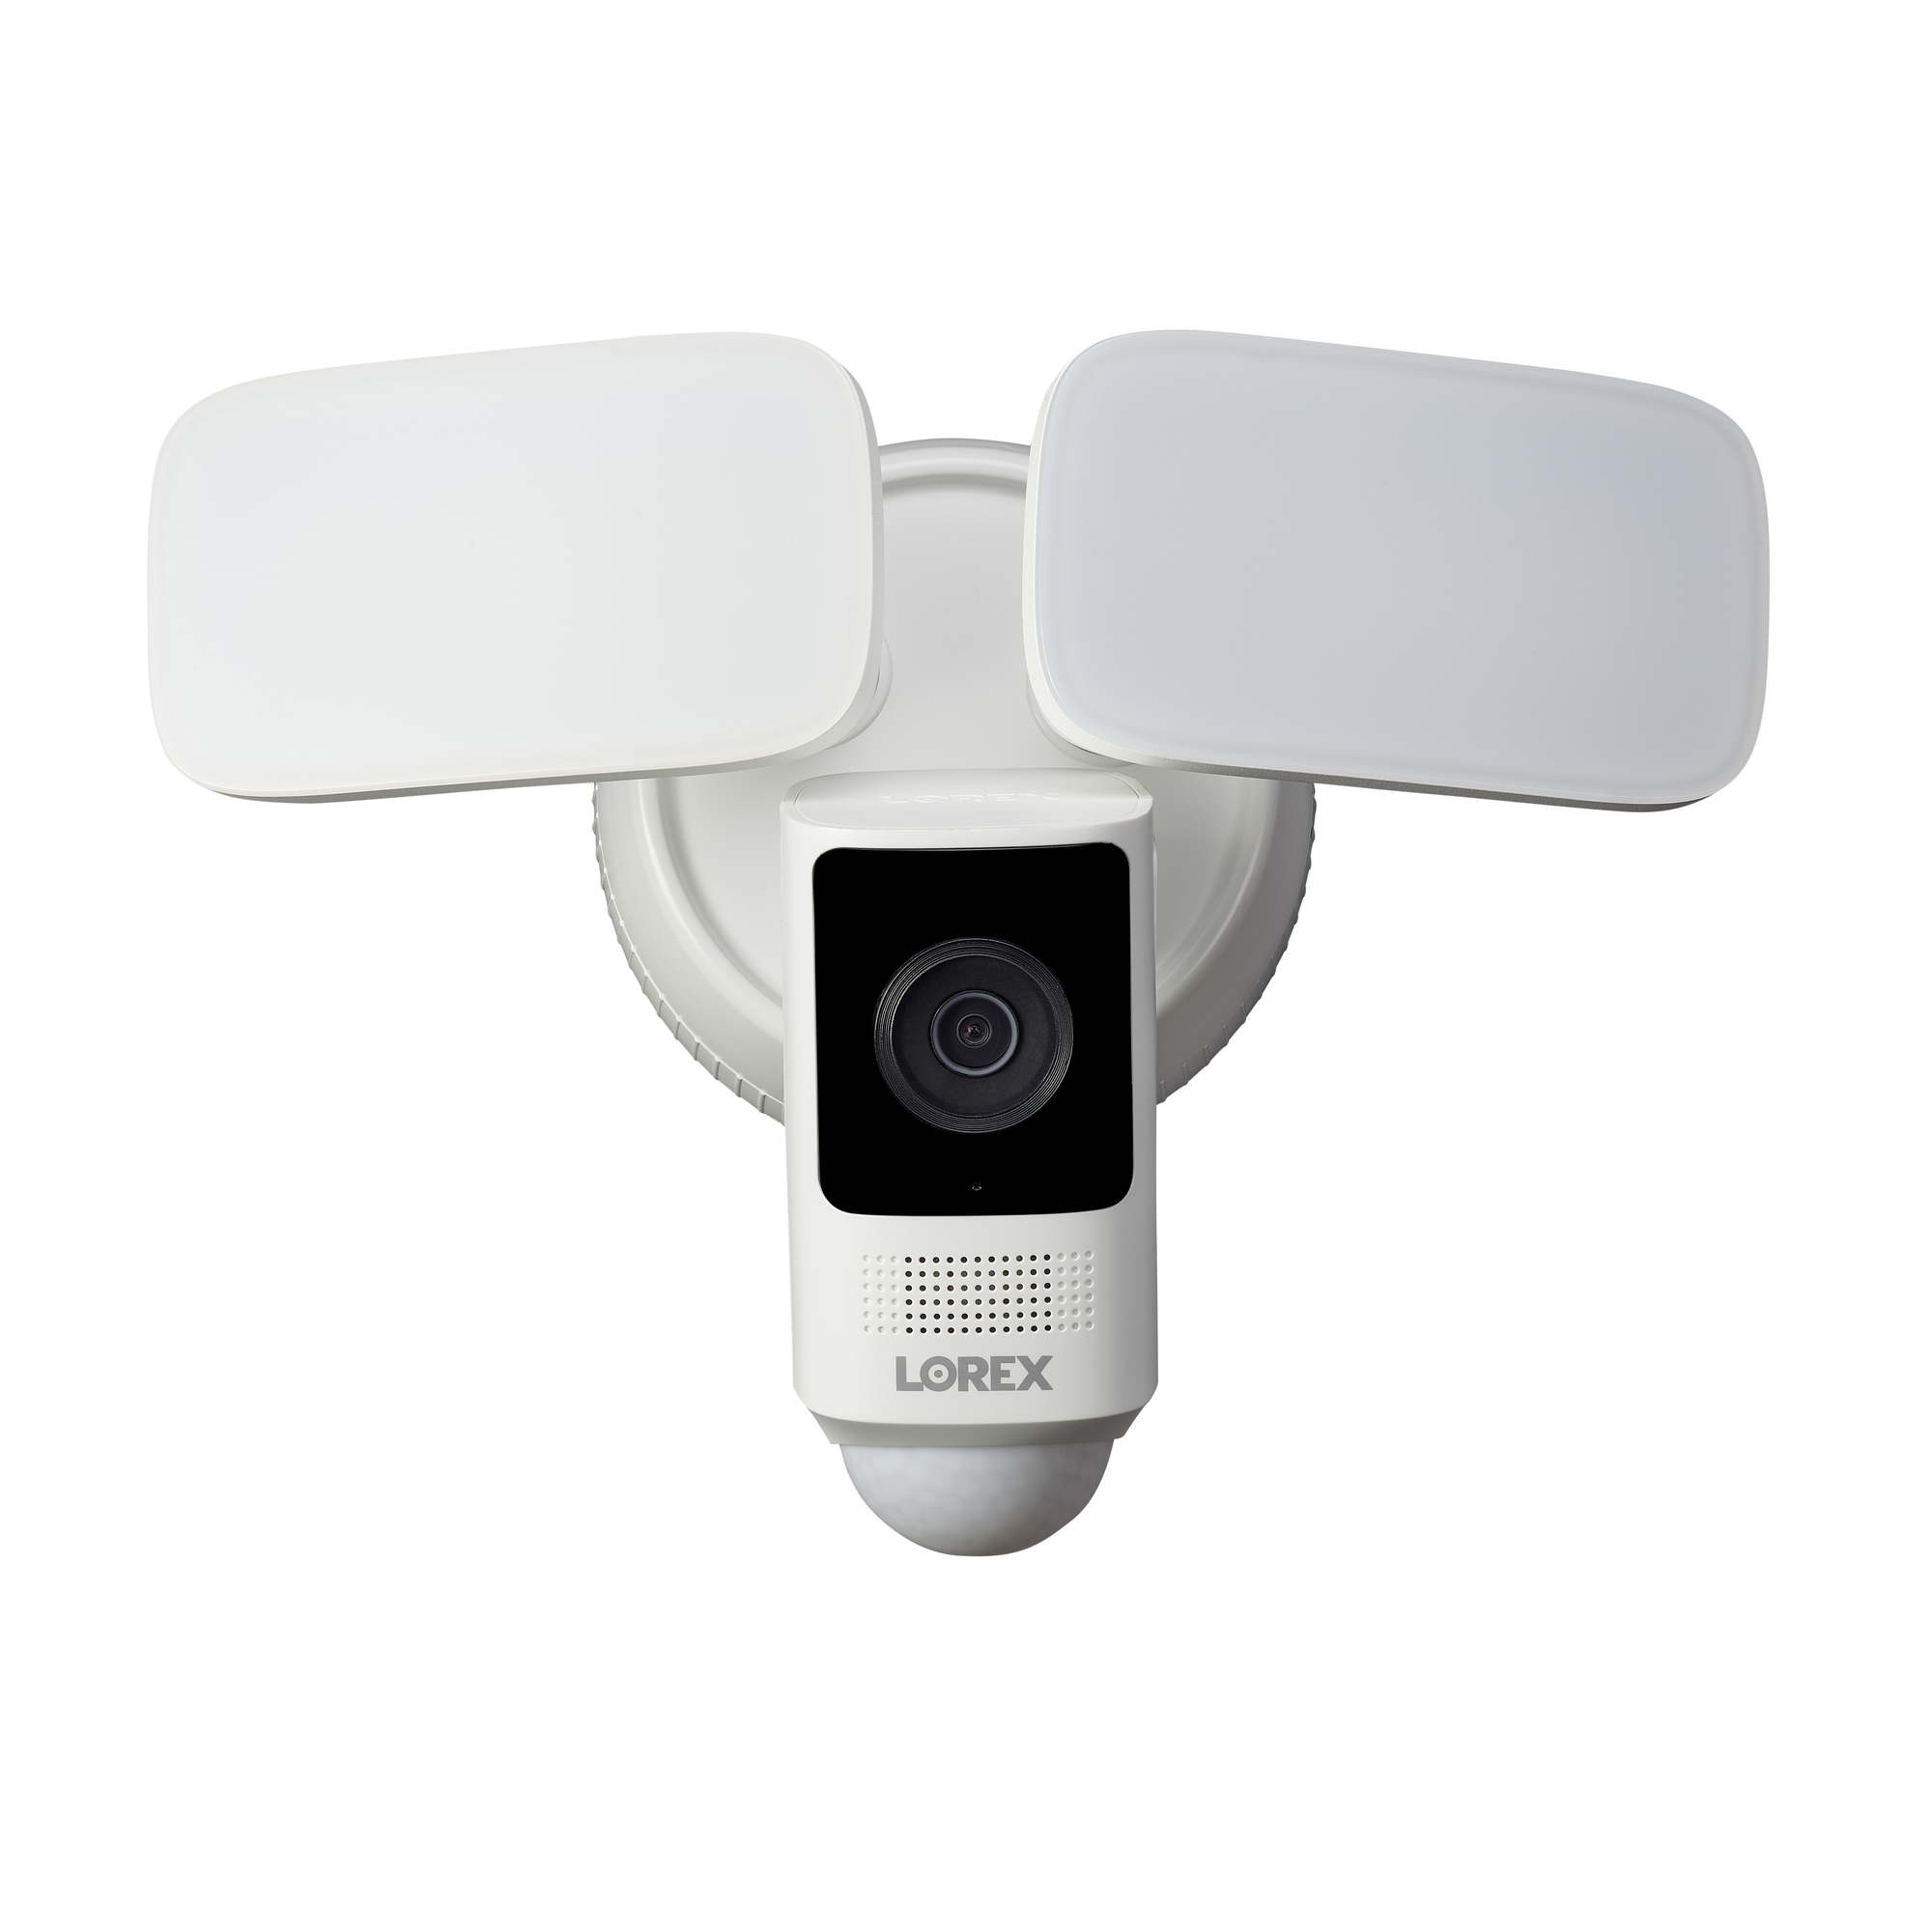 Lorex, 2K Wired Floodlight Camera White, Product Style DVR/monitoring kit, Camera (qty.) 1 Resolution 2K, Model W452ASD-E